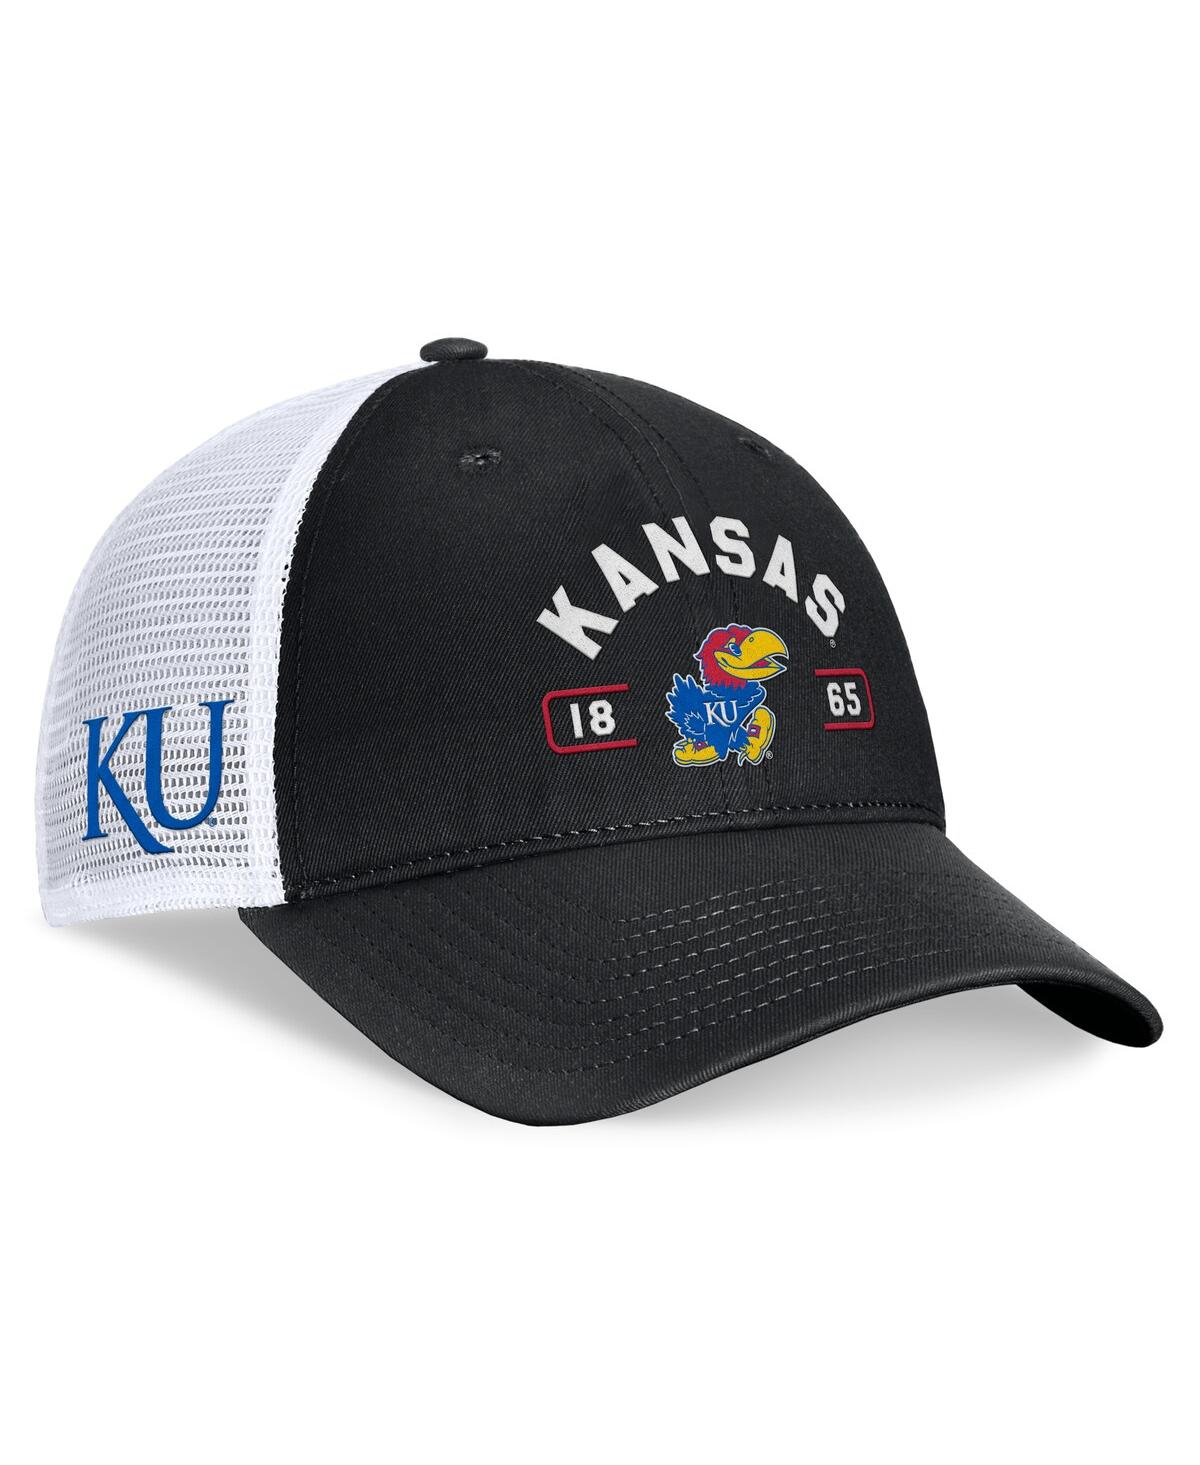 Men's Black/White Kansas Jayhawks Free Kick Trucker Adjustable Hat - Black, White